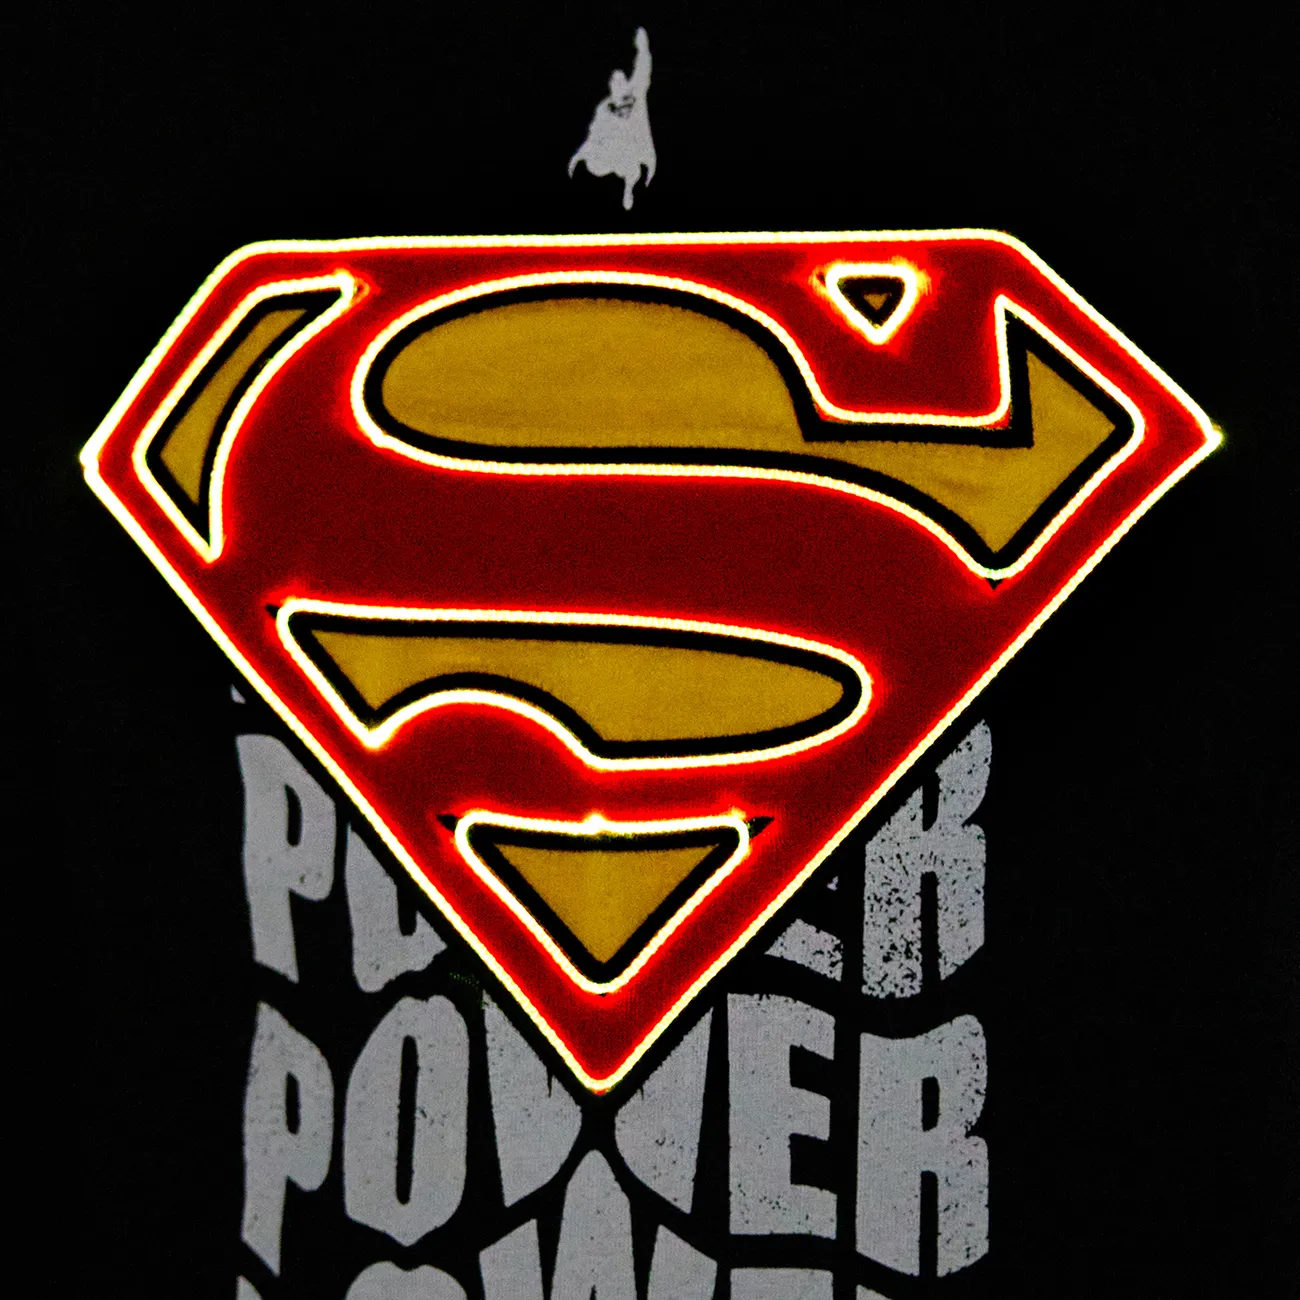 Go-Glow SUPERMAN Illuminating Black Sweatshirt with Light Up Superman Pattern Including Controller (Battery Inside) Black big image 1